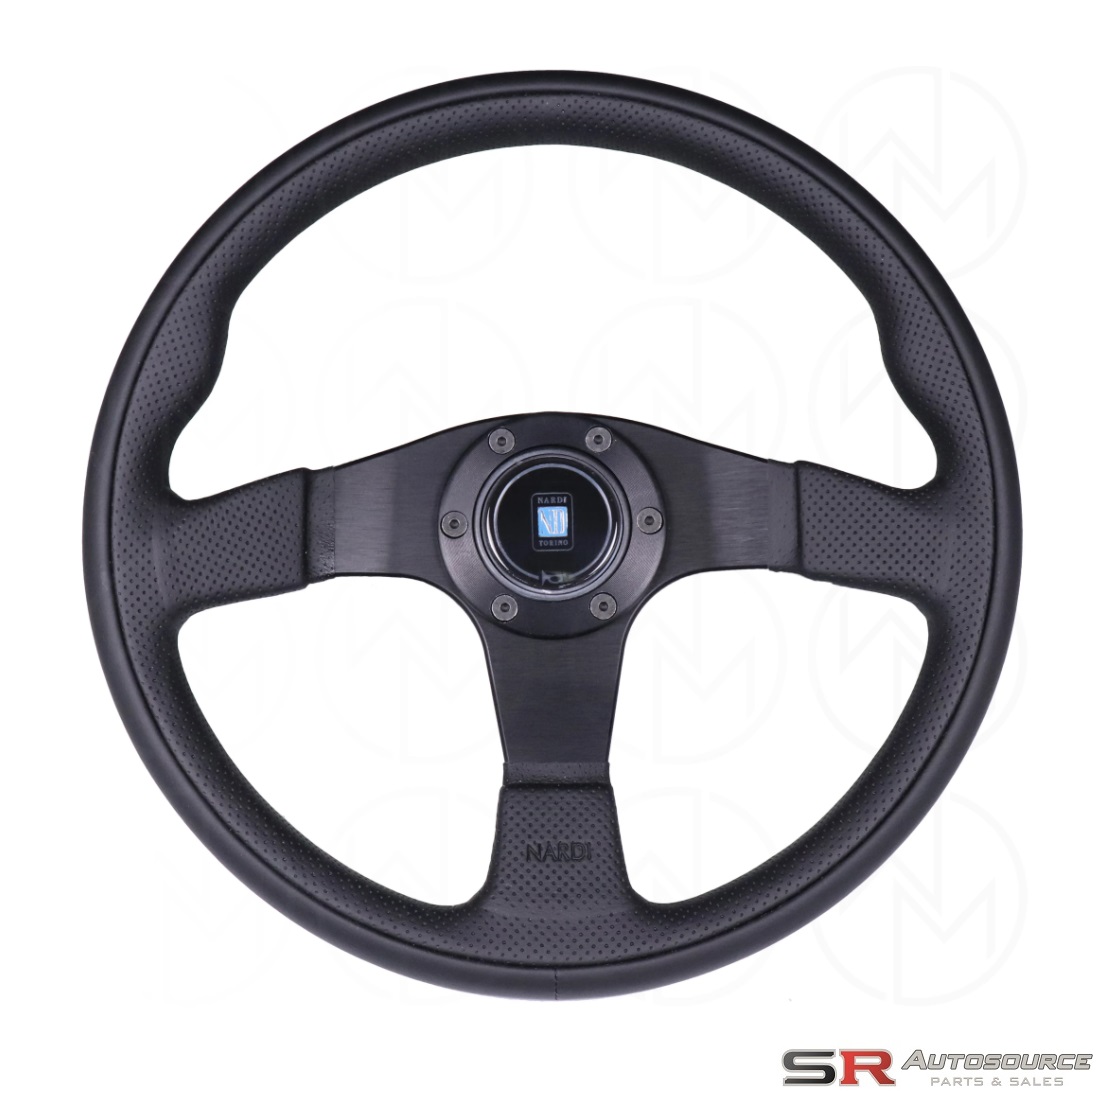 Nardi Twin Steering Wheel – 350mm Black